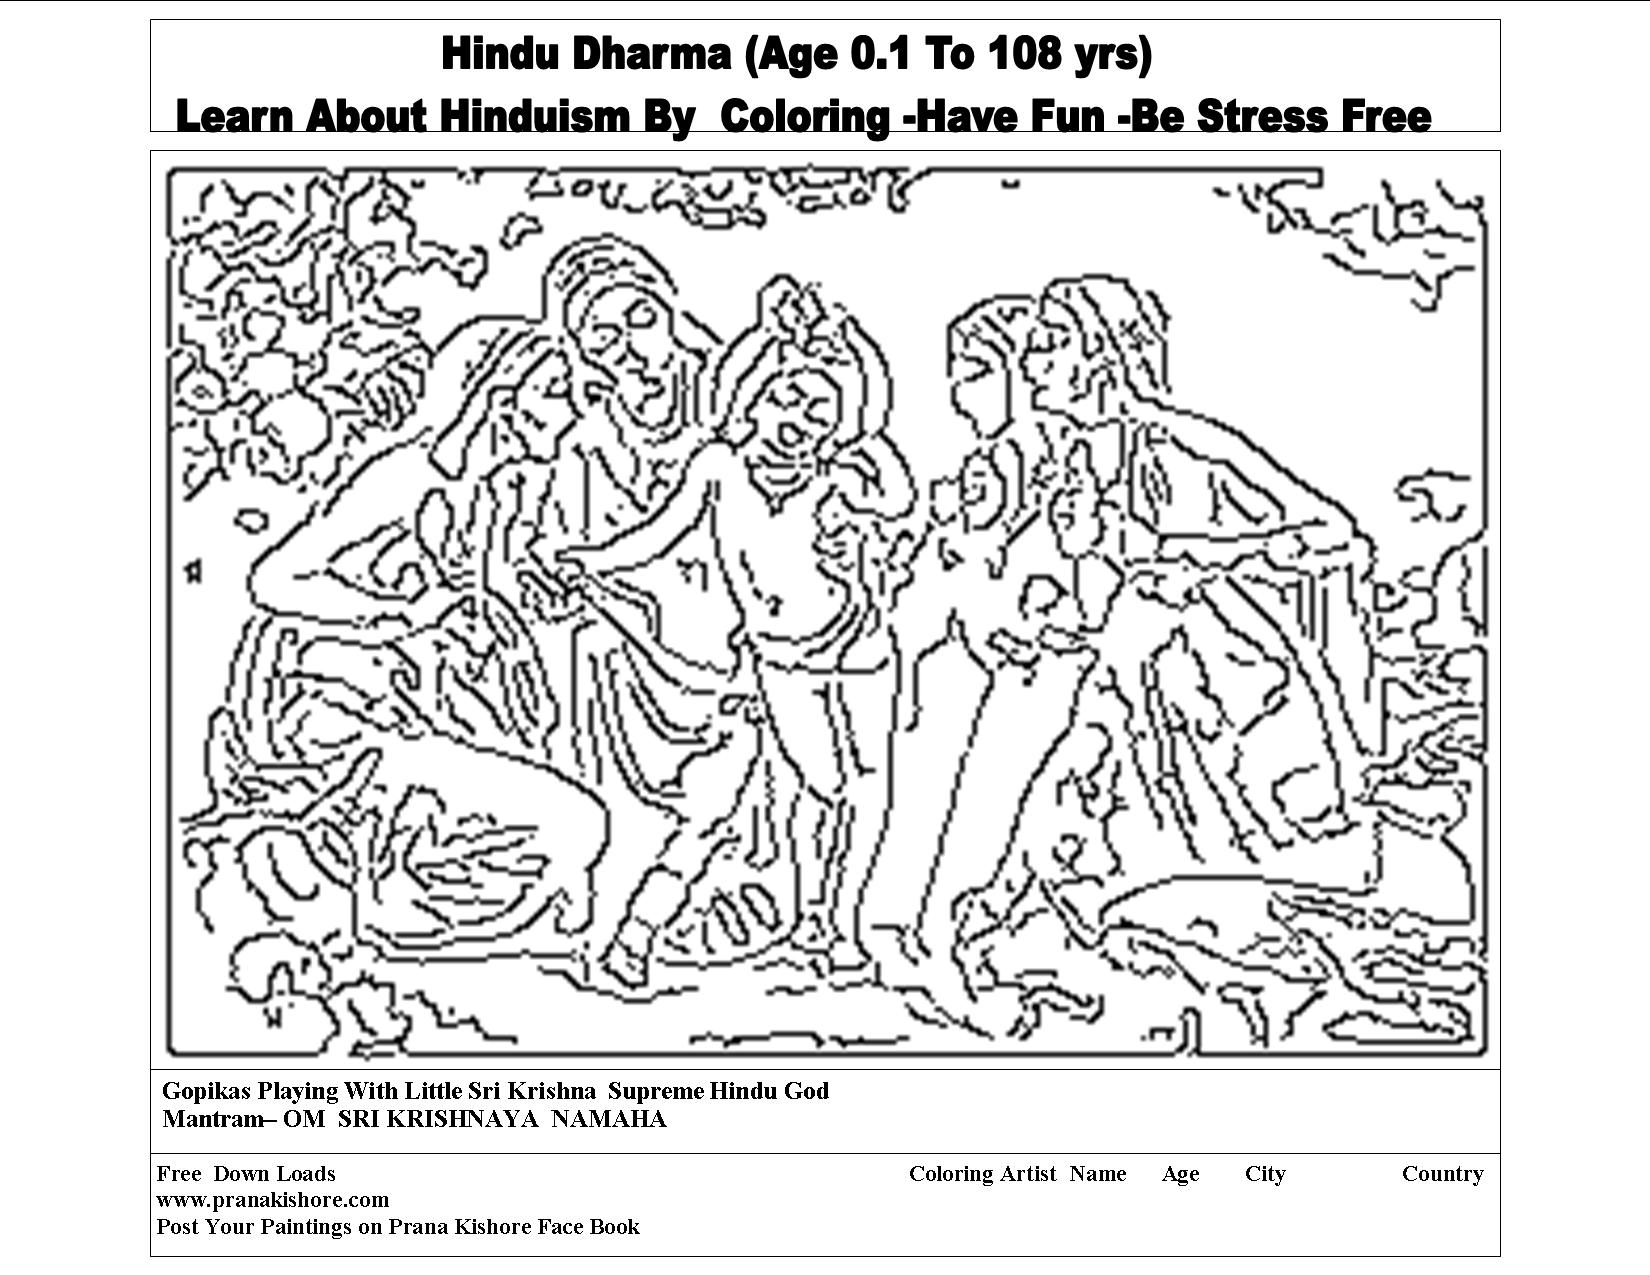 Hindu Dharma Coloring- Gopikas Playing With Little Krishna